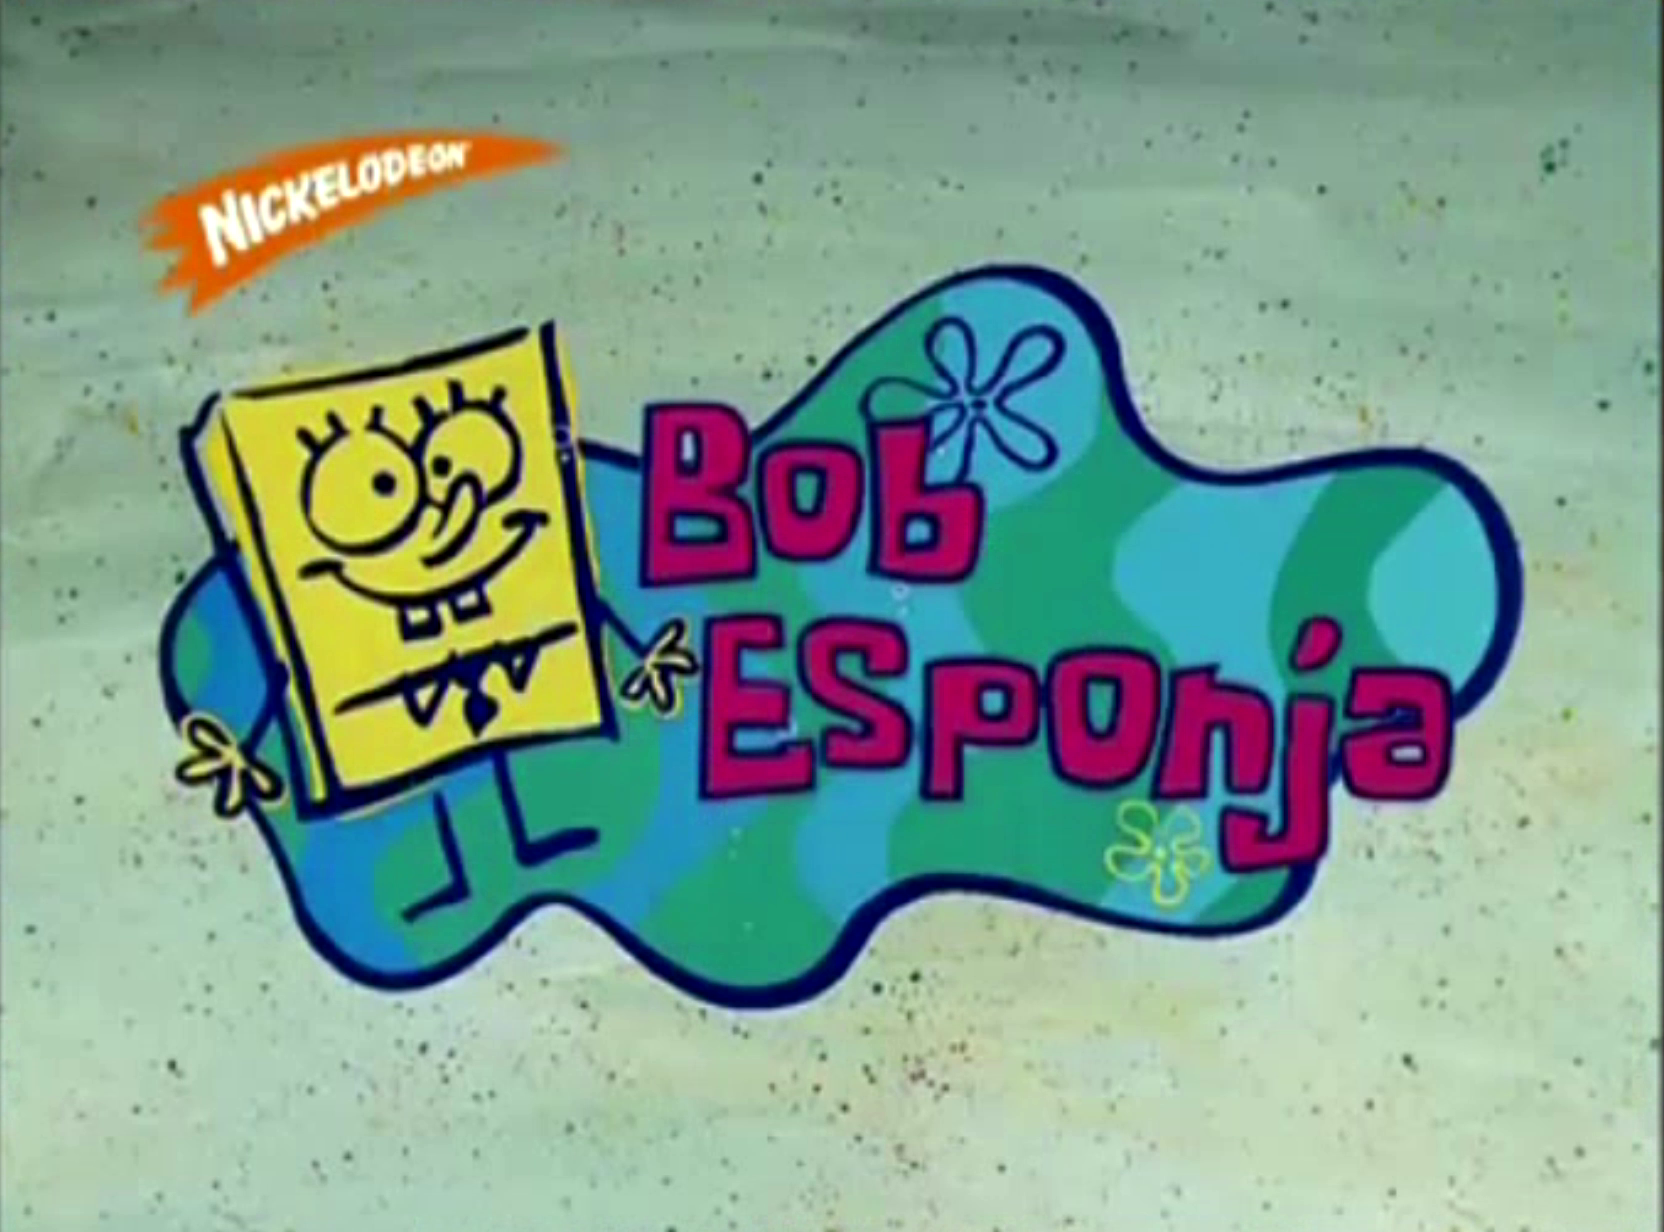 spanish spongebob episodes